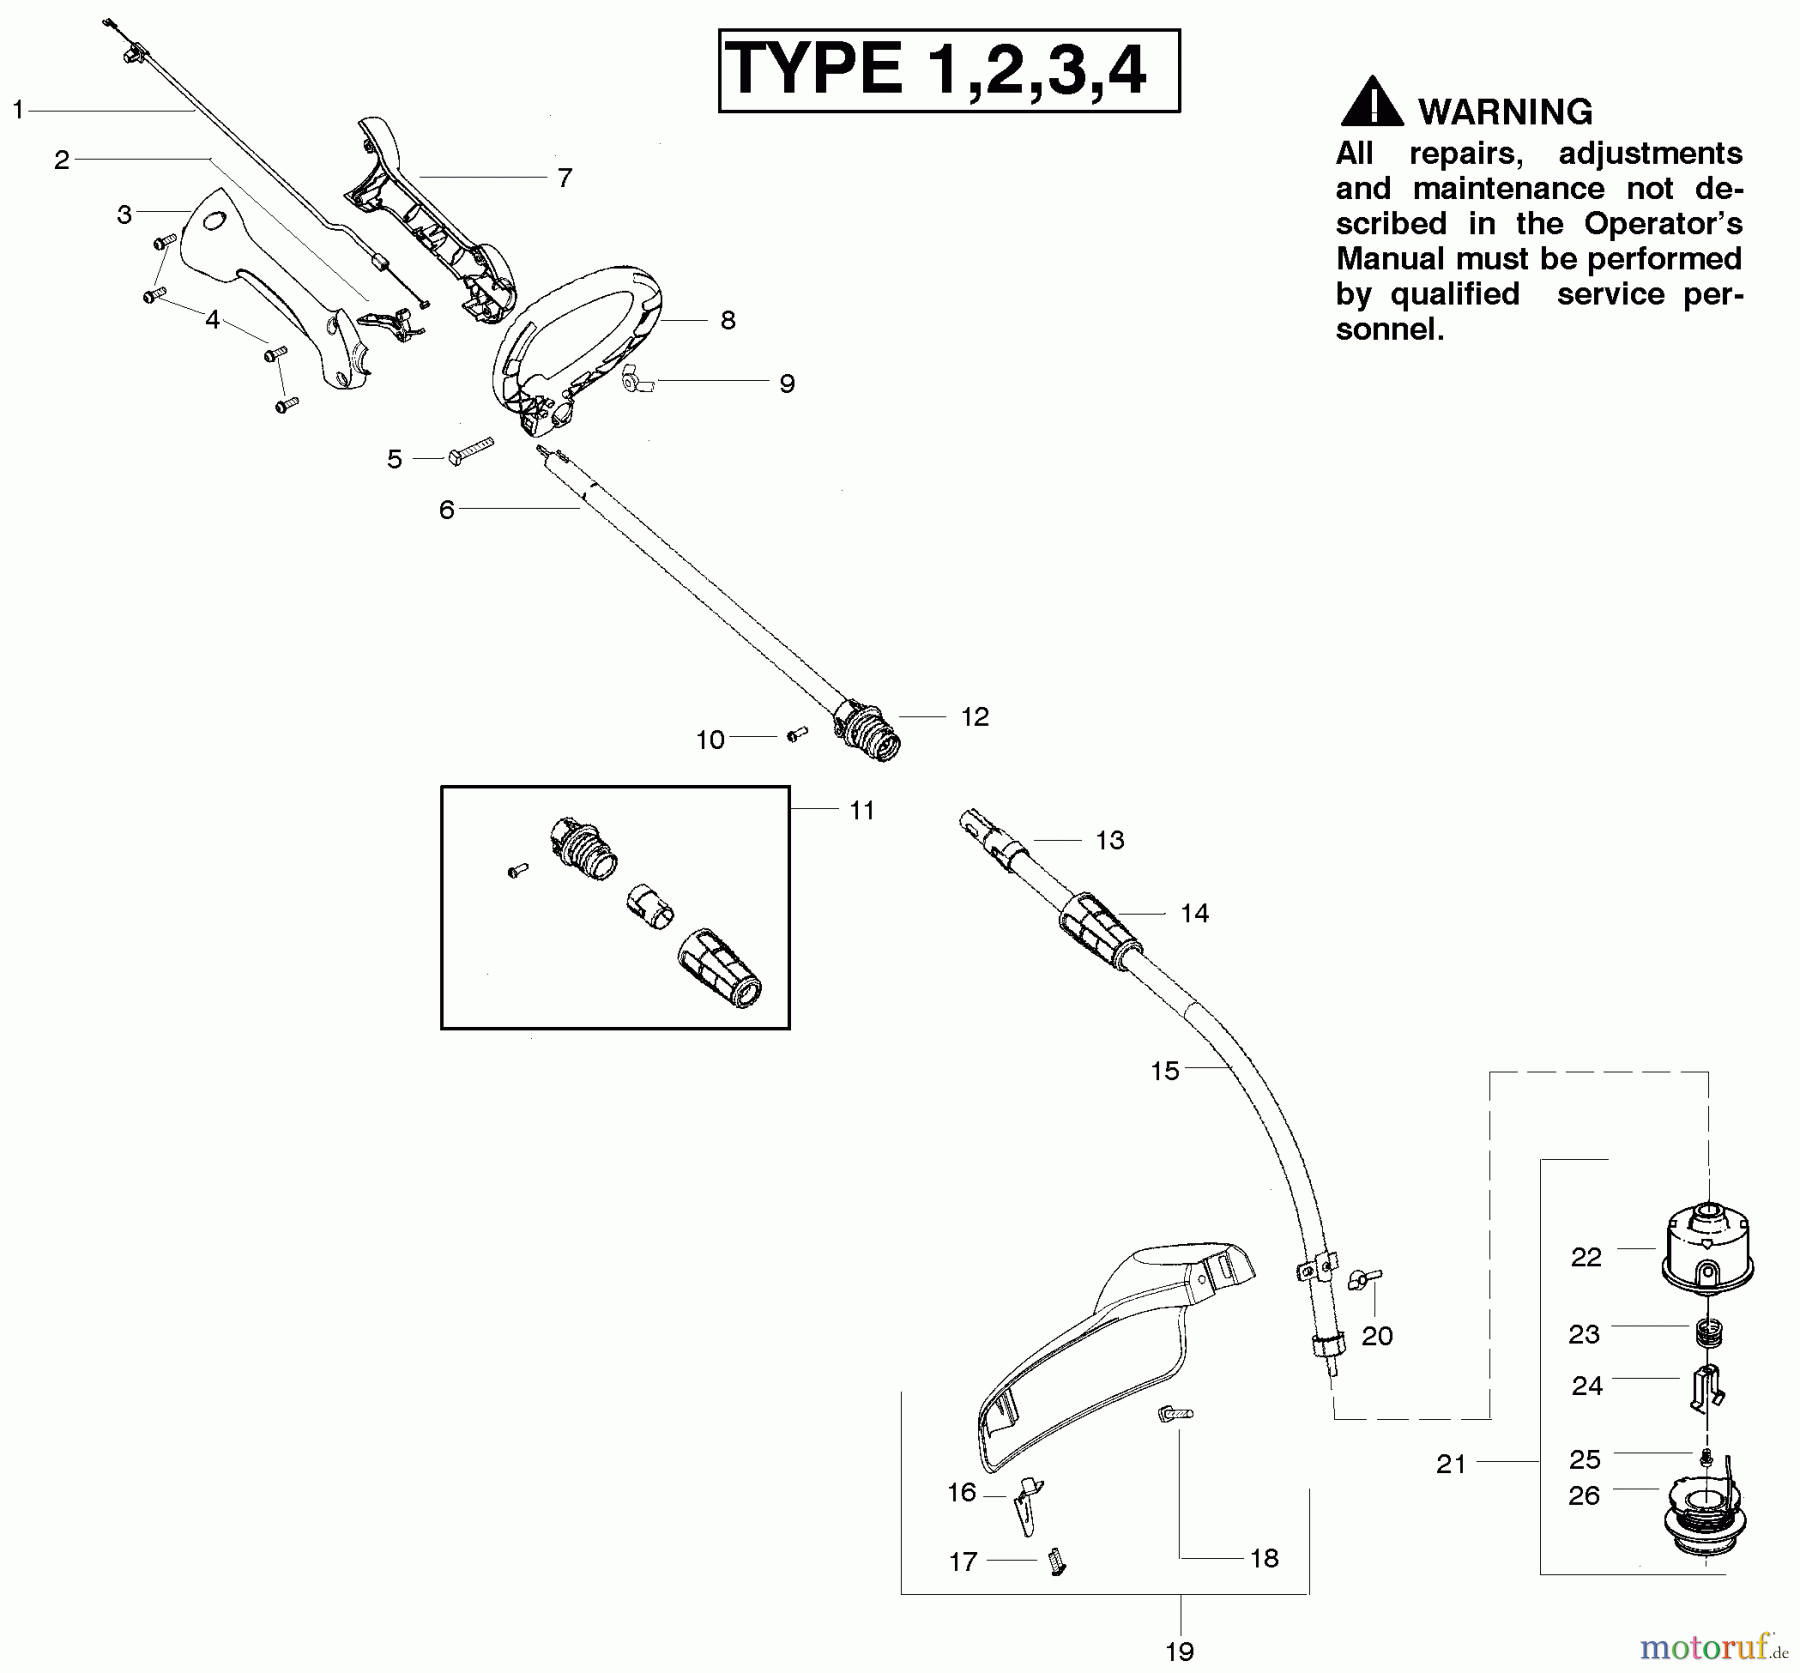  Poulan / Weed Eater Motorsensen, Trimmer FL20C (Type 2) - Weed Eater Featherlite String Trimmer Cutting Equipment Type 1,2,3,4